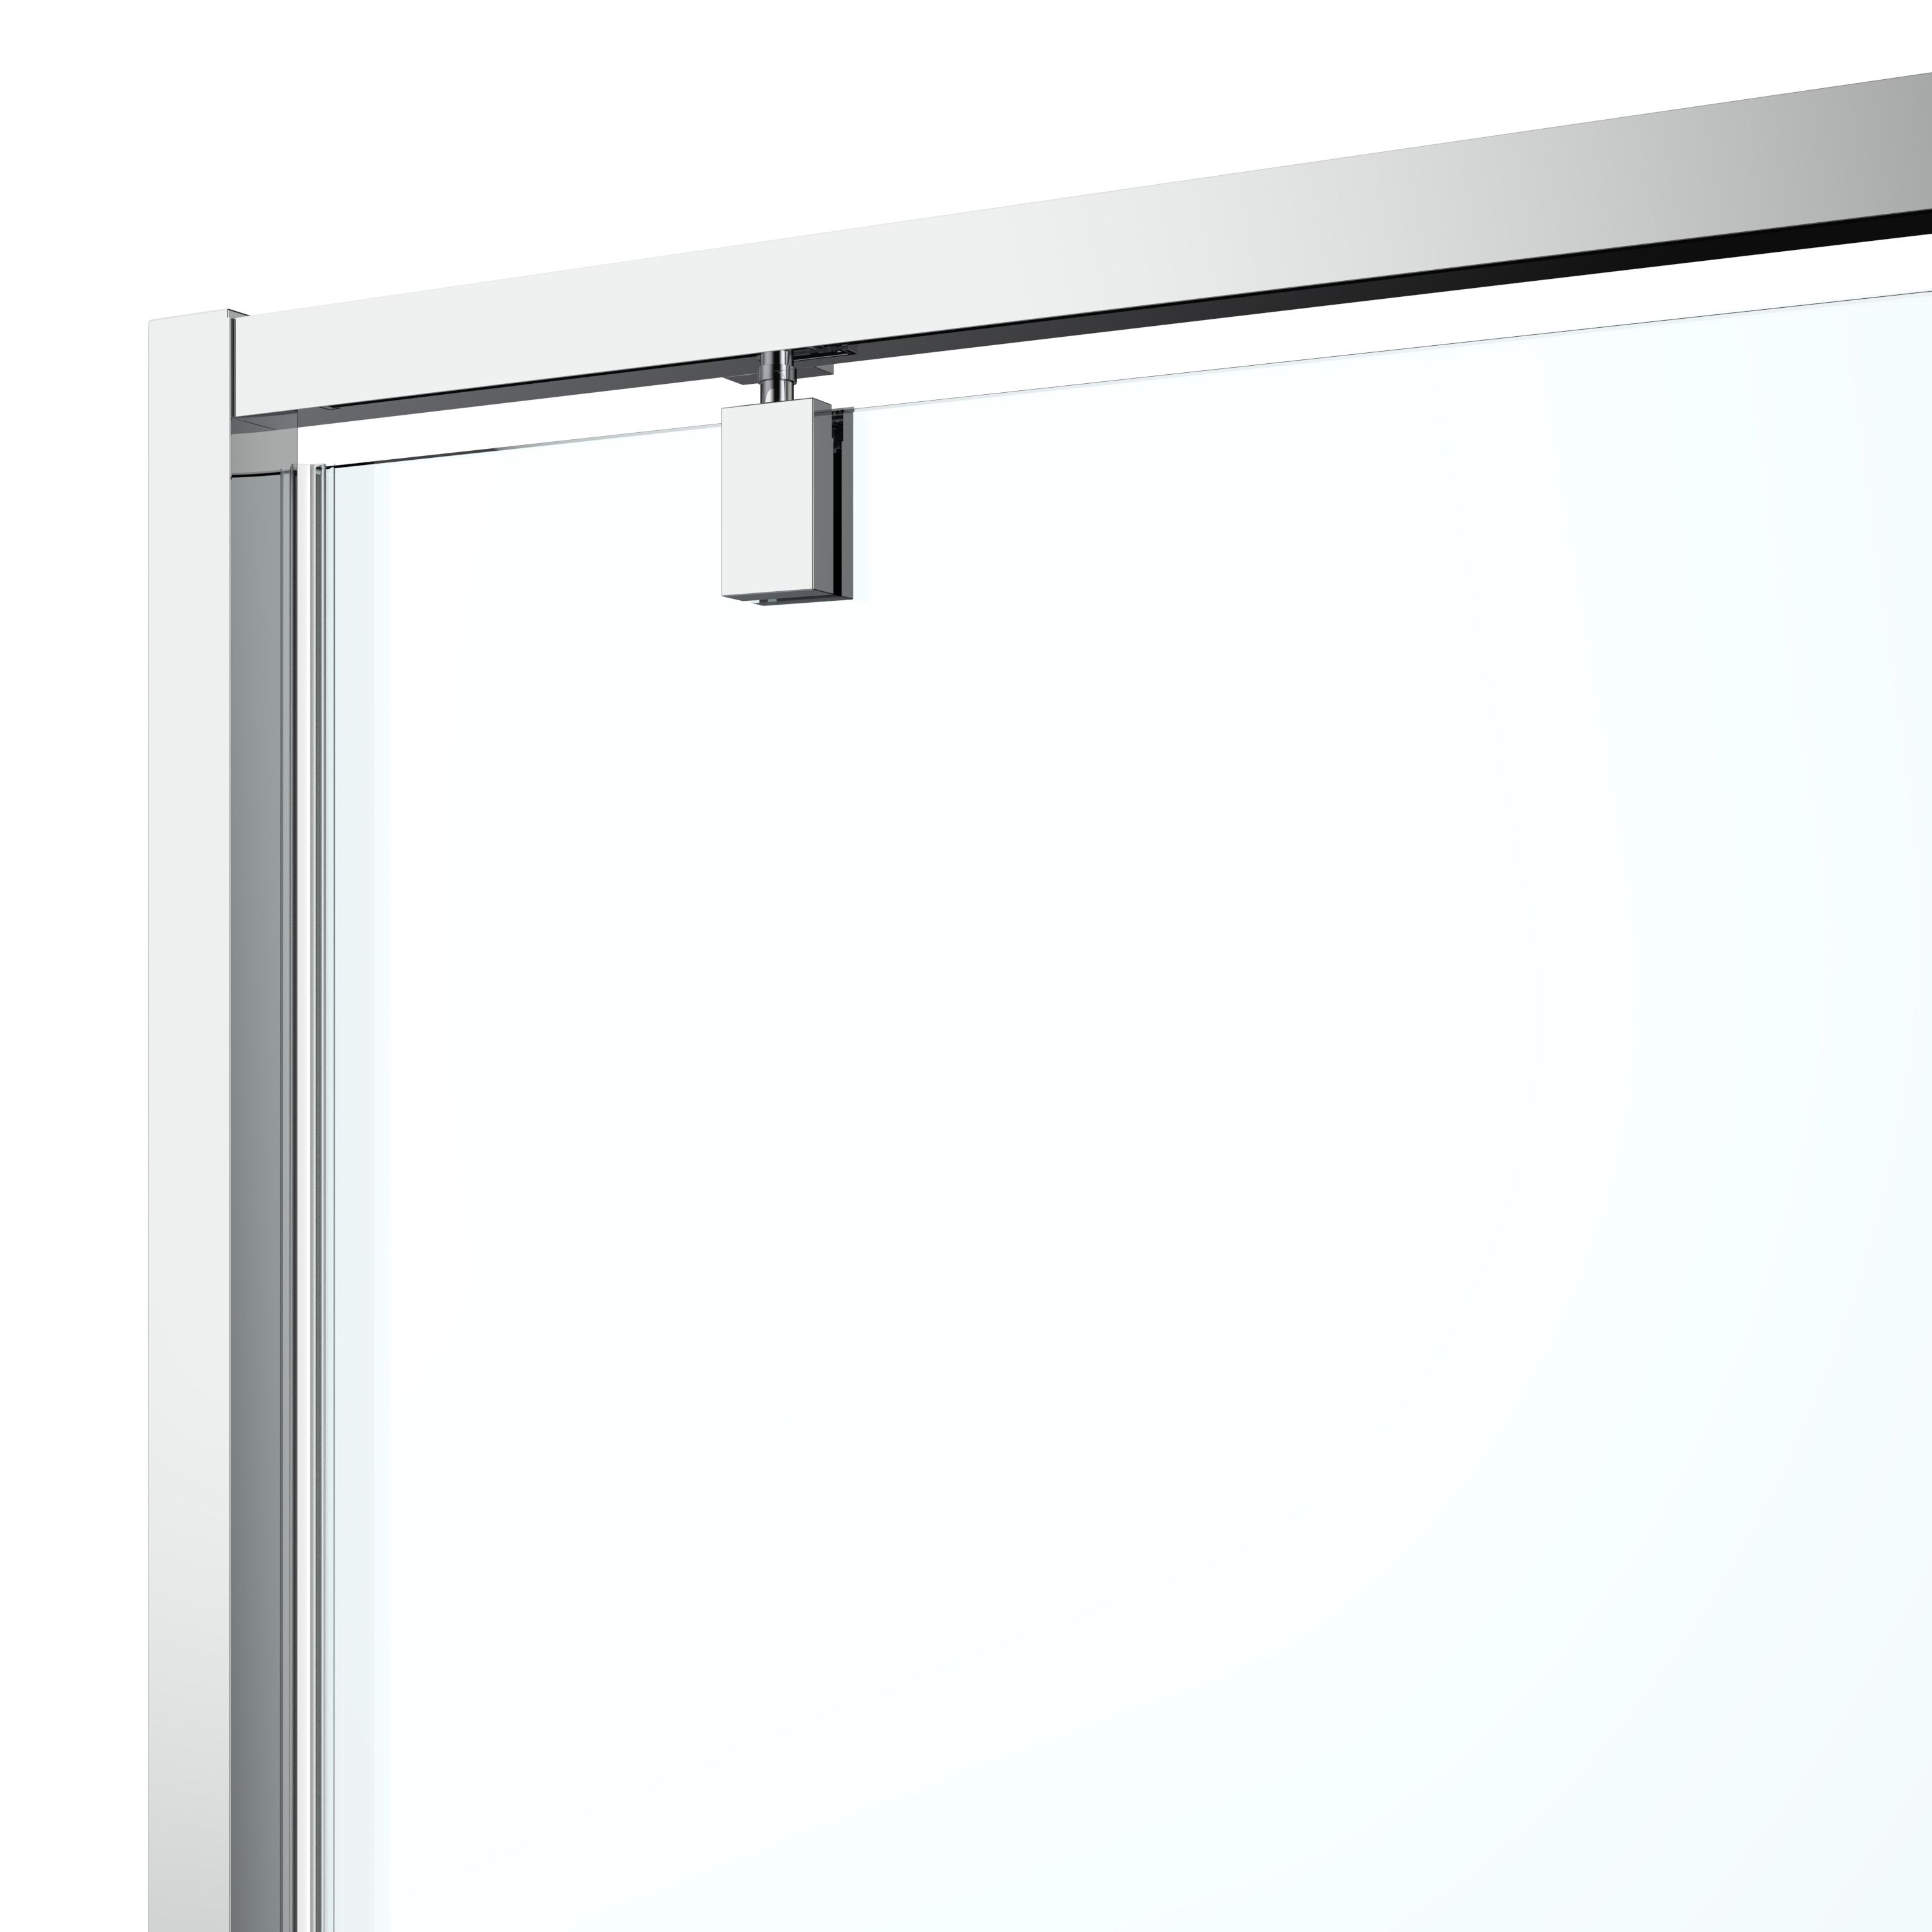 GoodHome Ledava Minimal frame Chrome effect Mirror Strip Half open pivot Shower Door (H)195cm (W)100cm